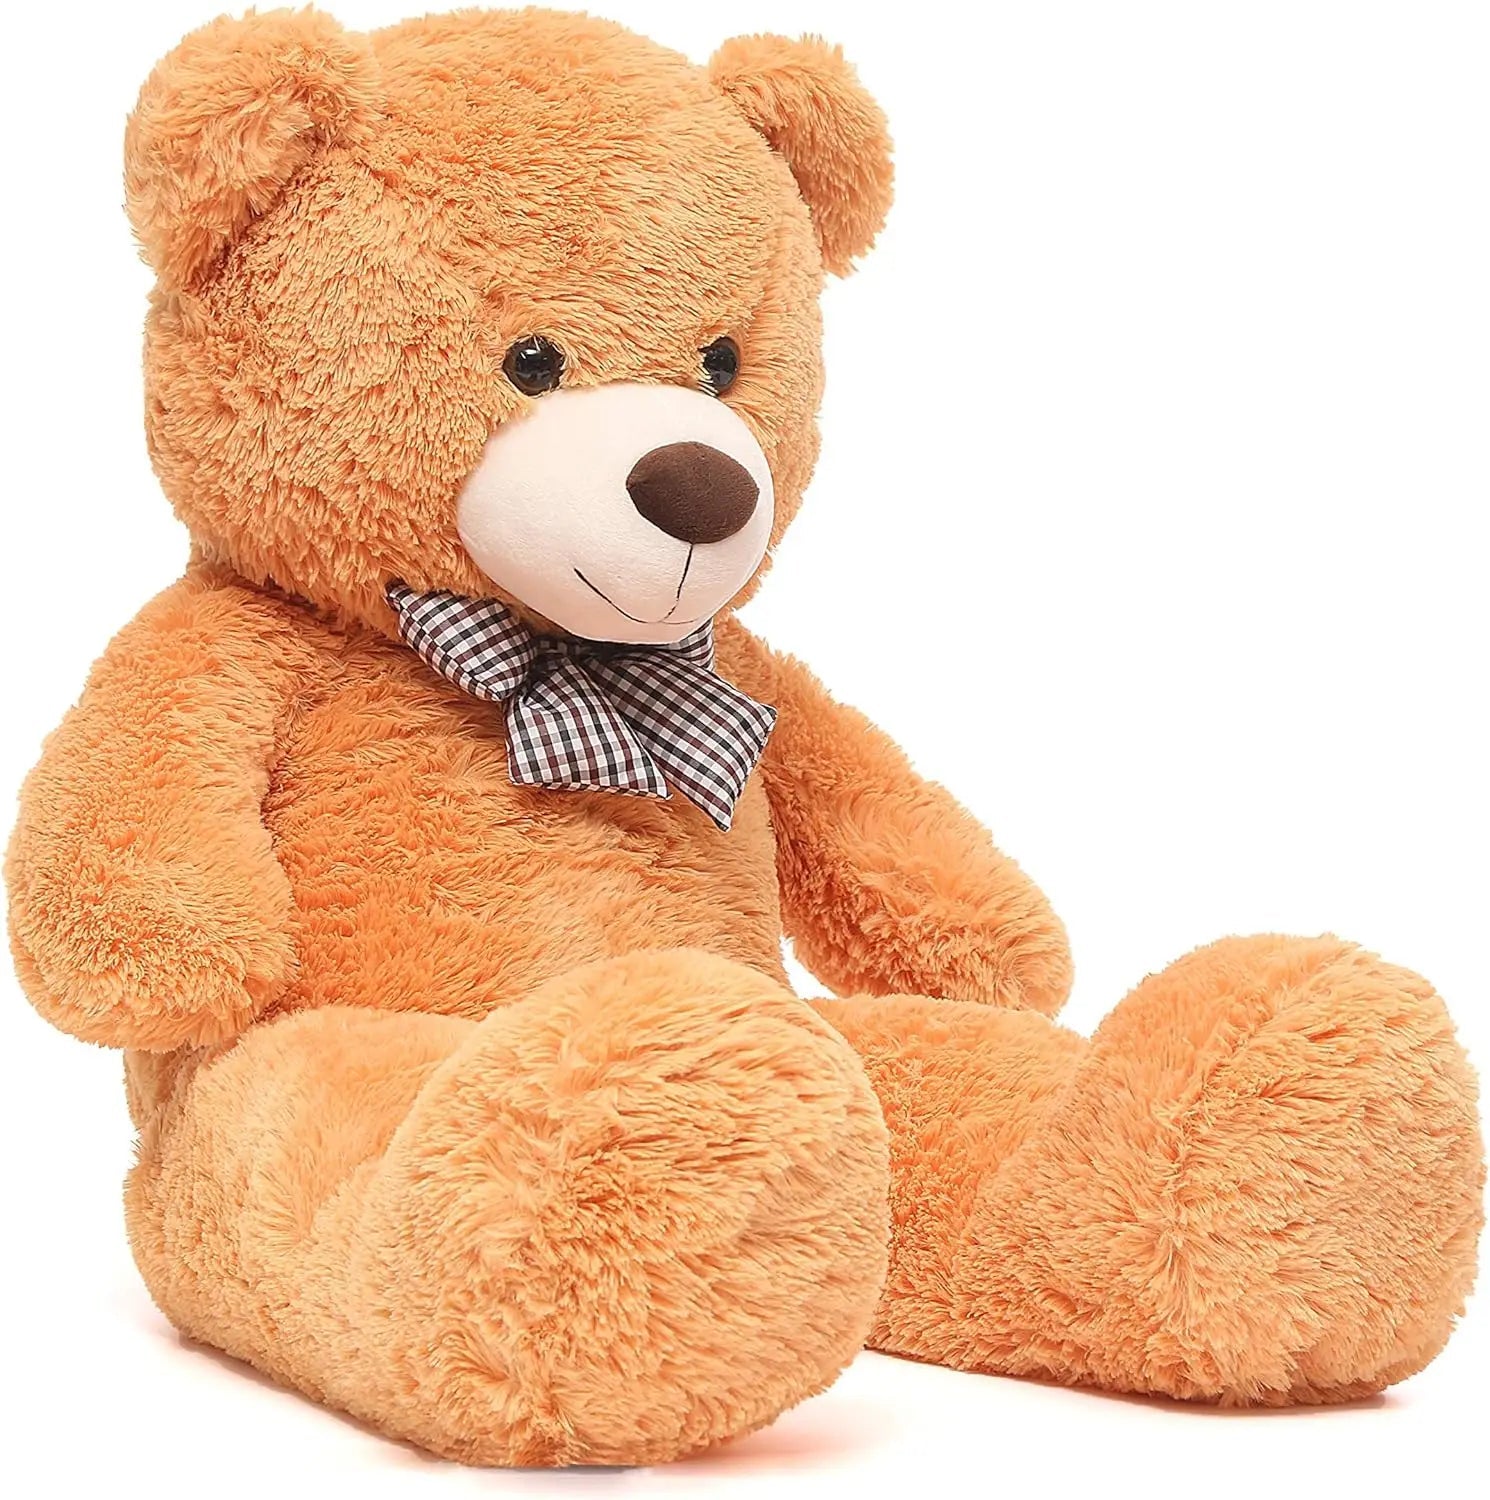 Giant Teddy Bear Plush Stuffed Animals for Girlfriend or Kids 47 inch - ToylandEU